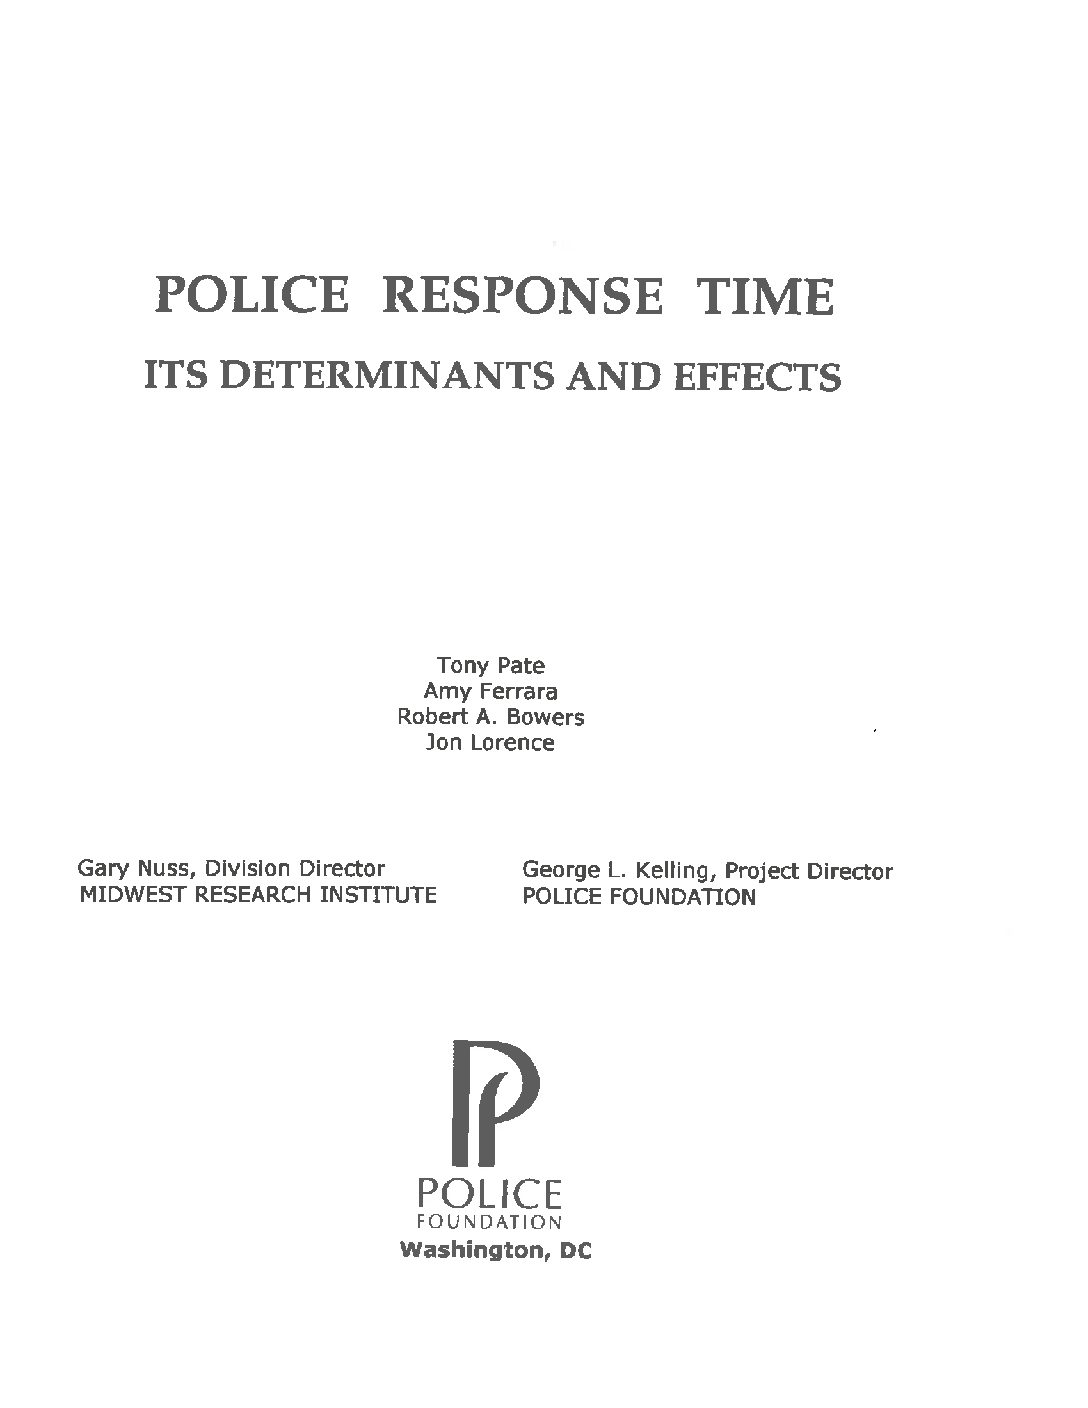 Pate-1976-Police-Response-Time-pdf